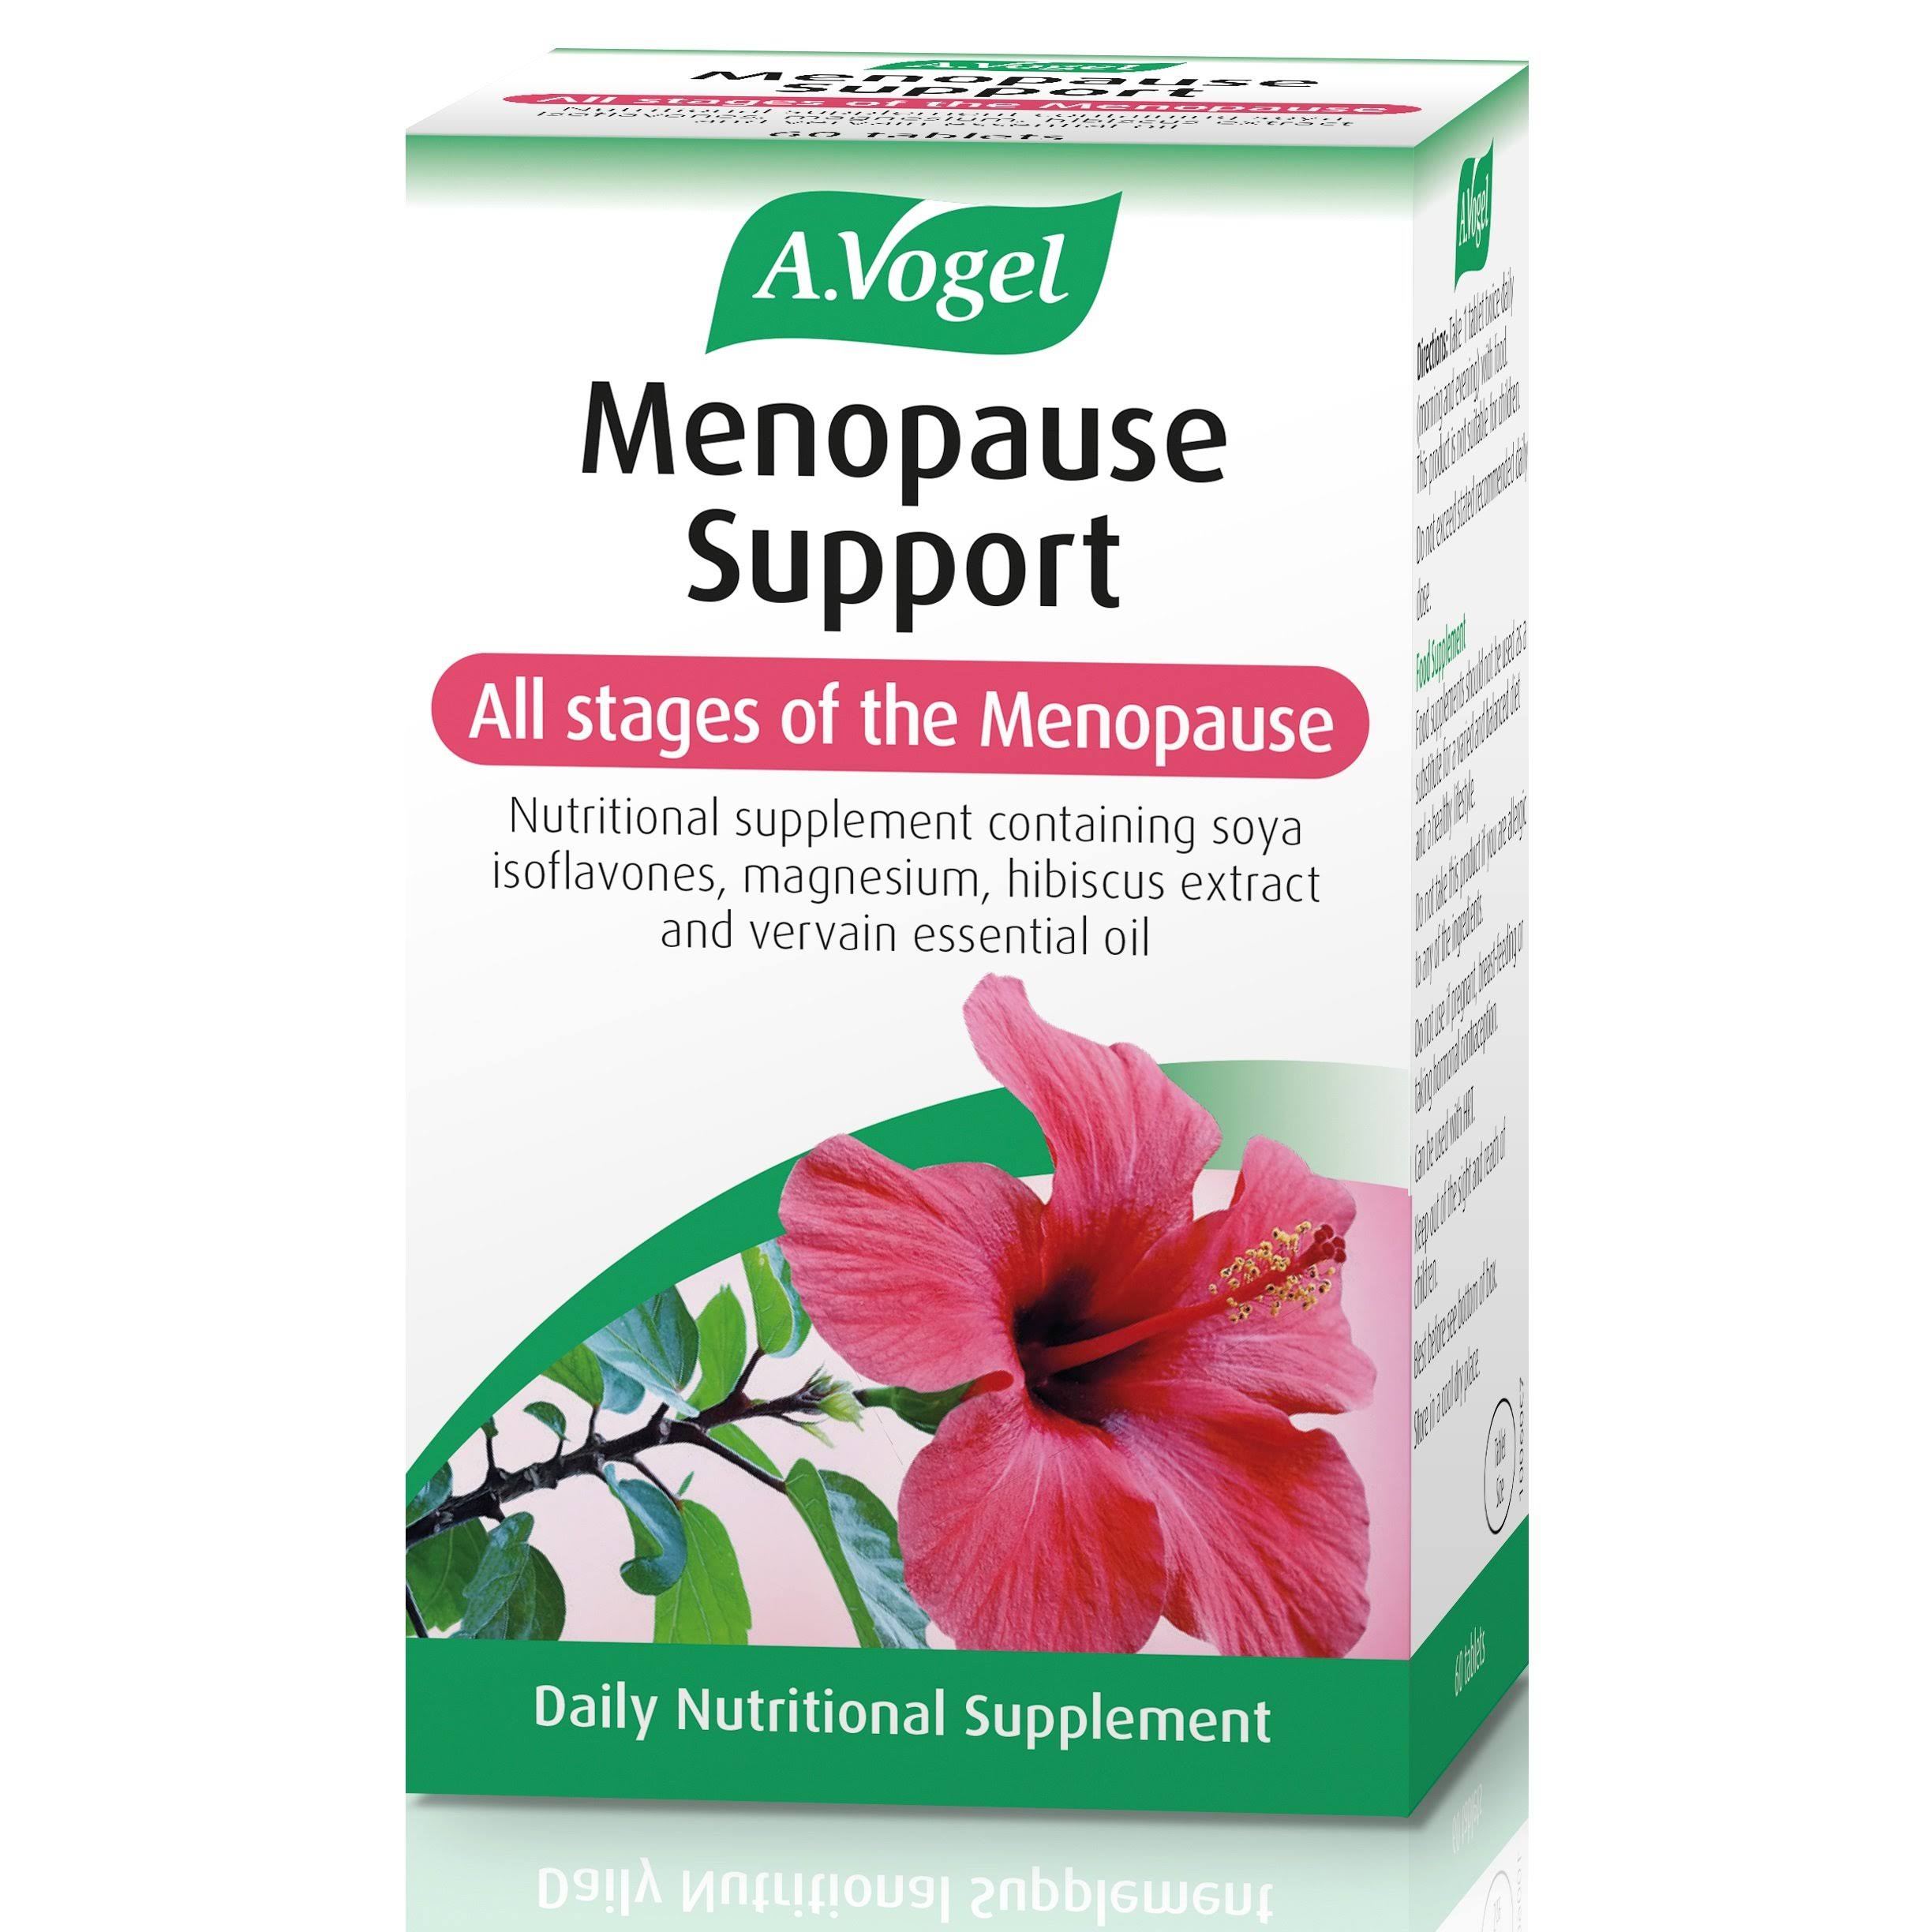 A.Vogel Menosan Menopause Support Supplement